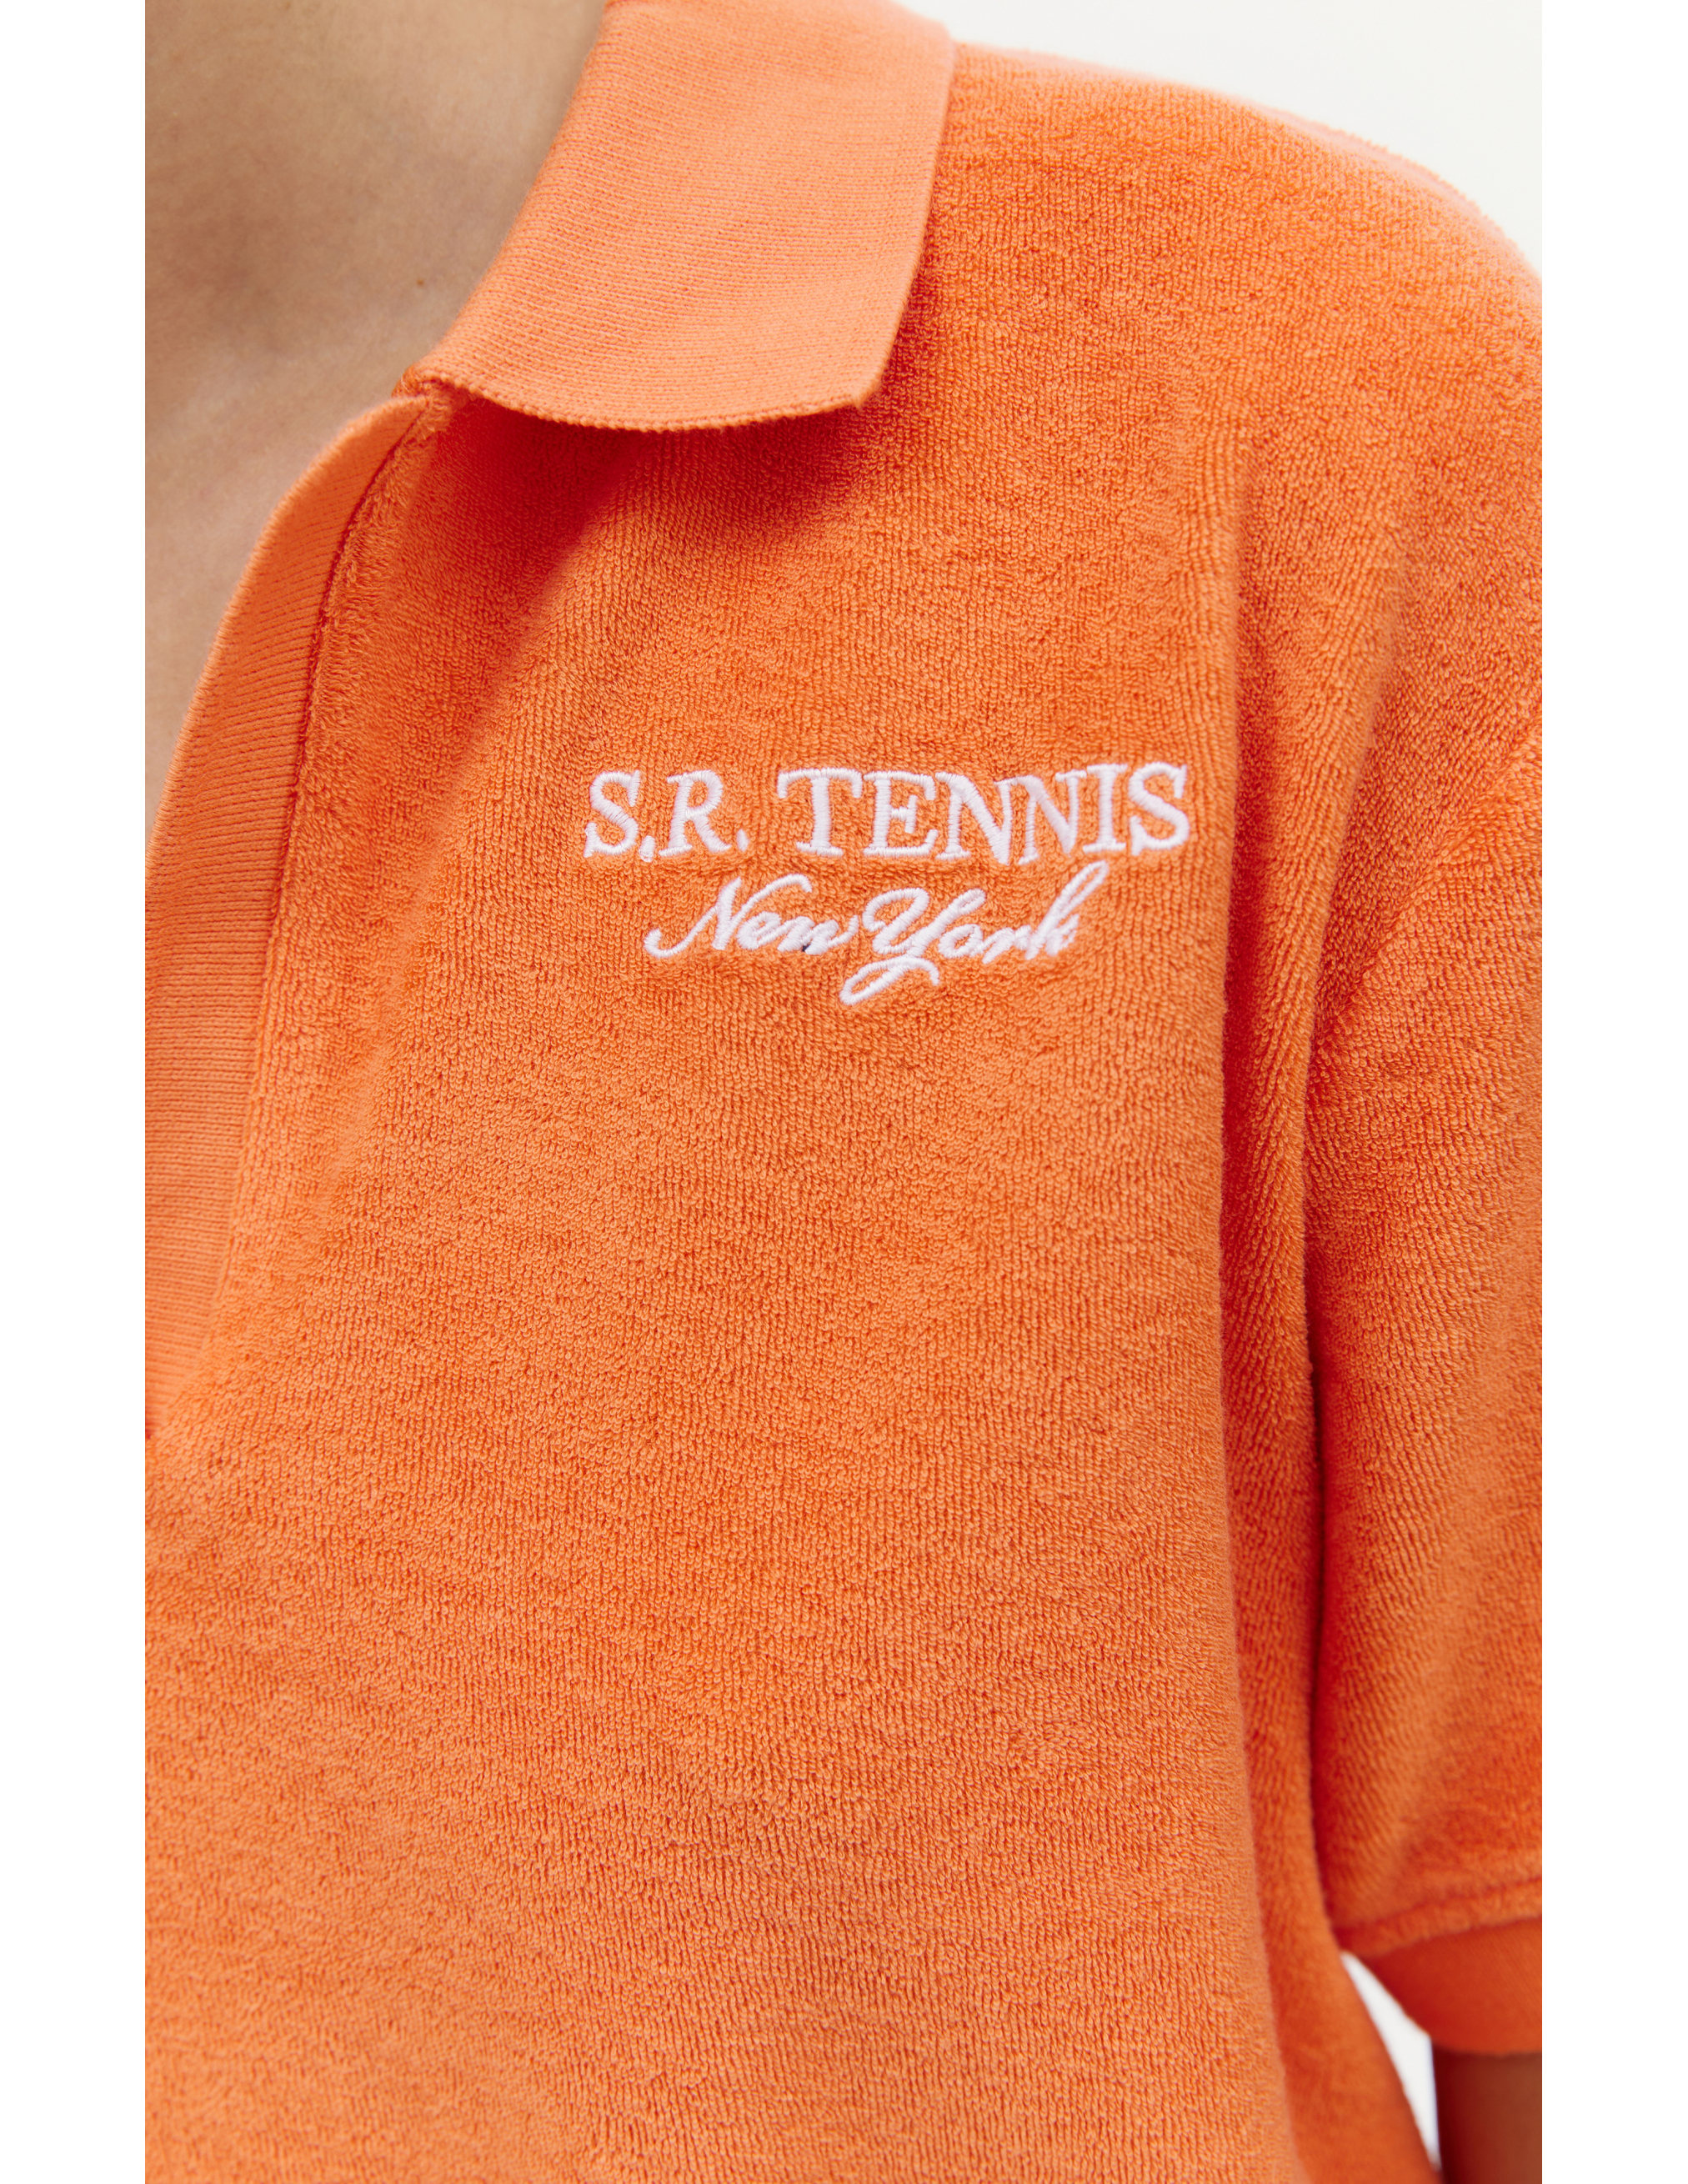 Оранжевое поло с вышивкой SR Tennis SPORTY & RICH PO922PO, размер S;M;L;XL - фото 4